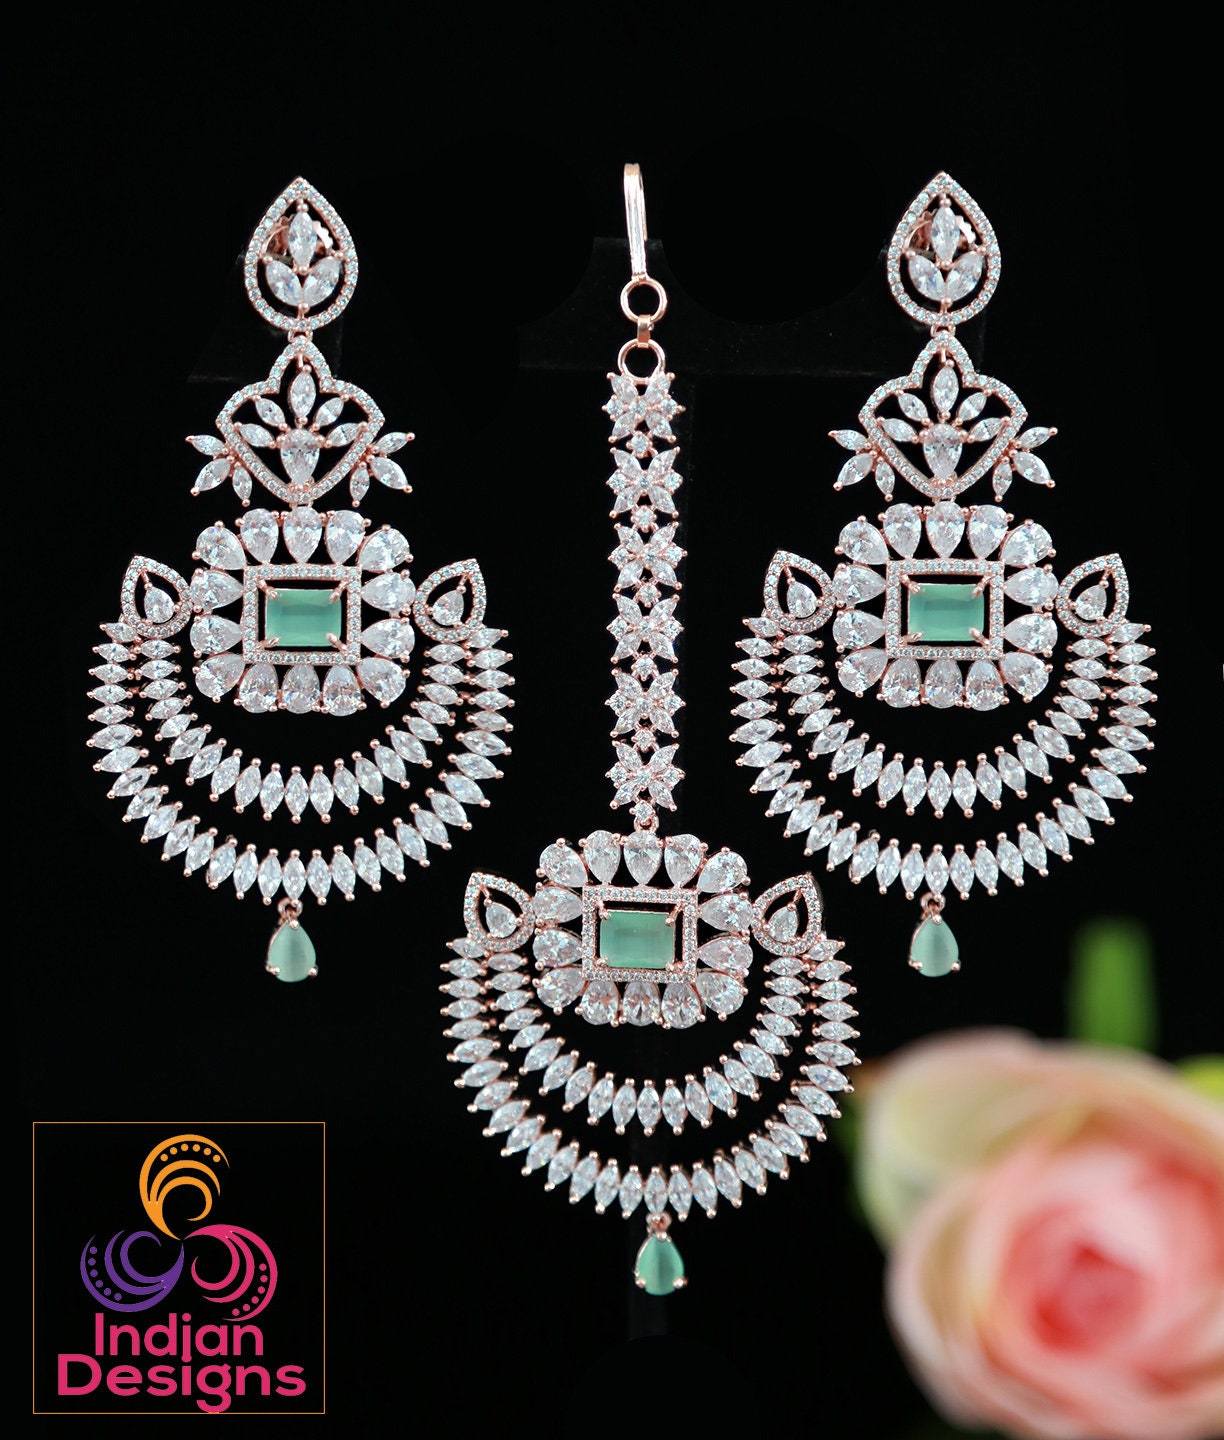 Chandbali crystal earrings tikka set Rose gold - Cz Color Stones | Punjabi earrings with maang tikka for wedding | Indian Designs collection